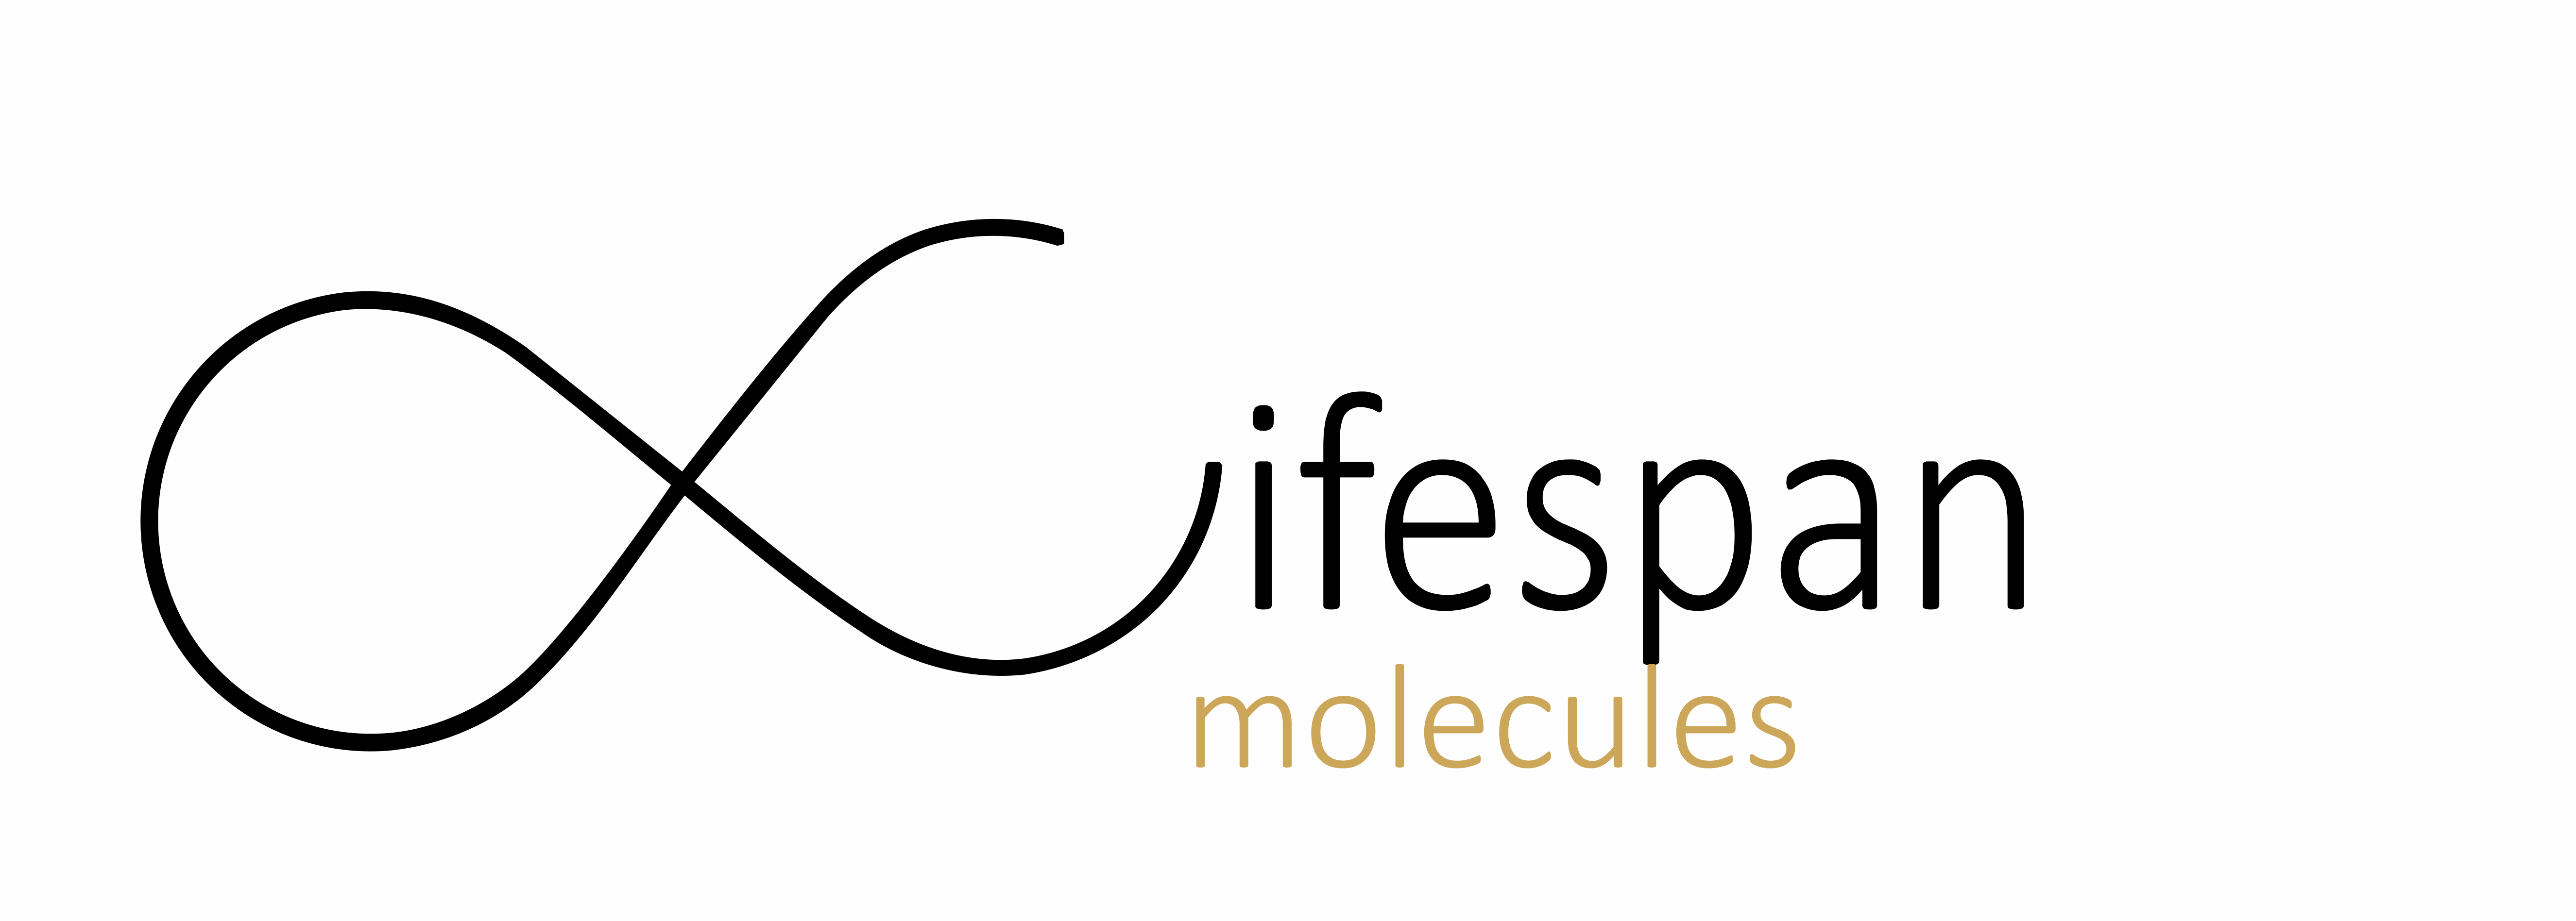 lifespanmolecules